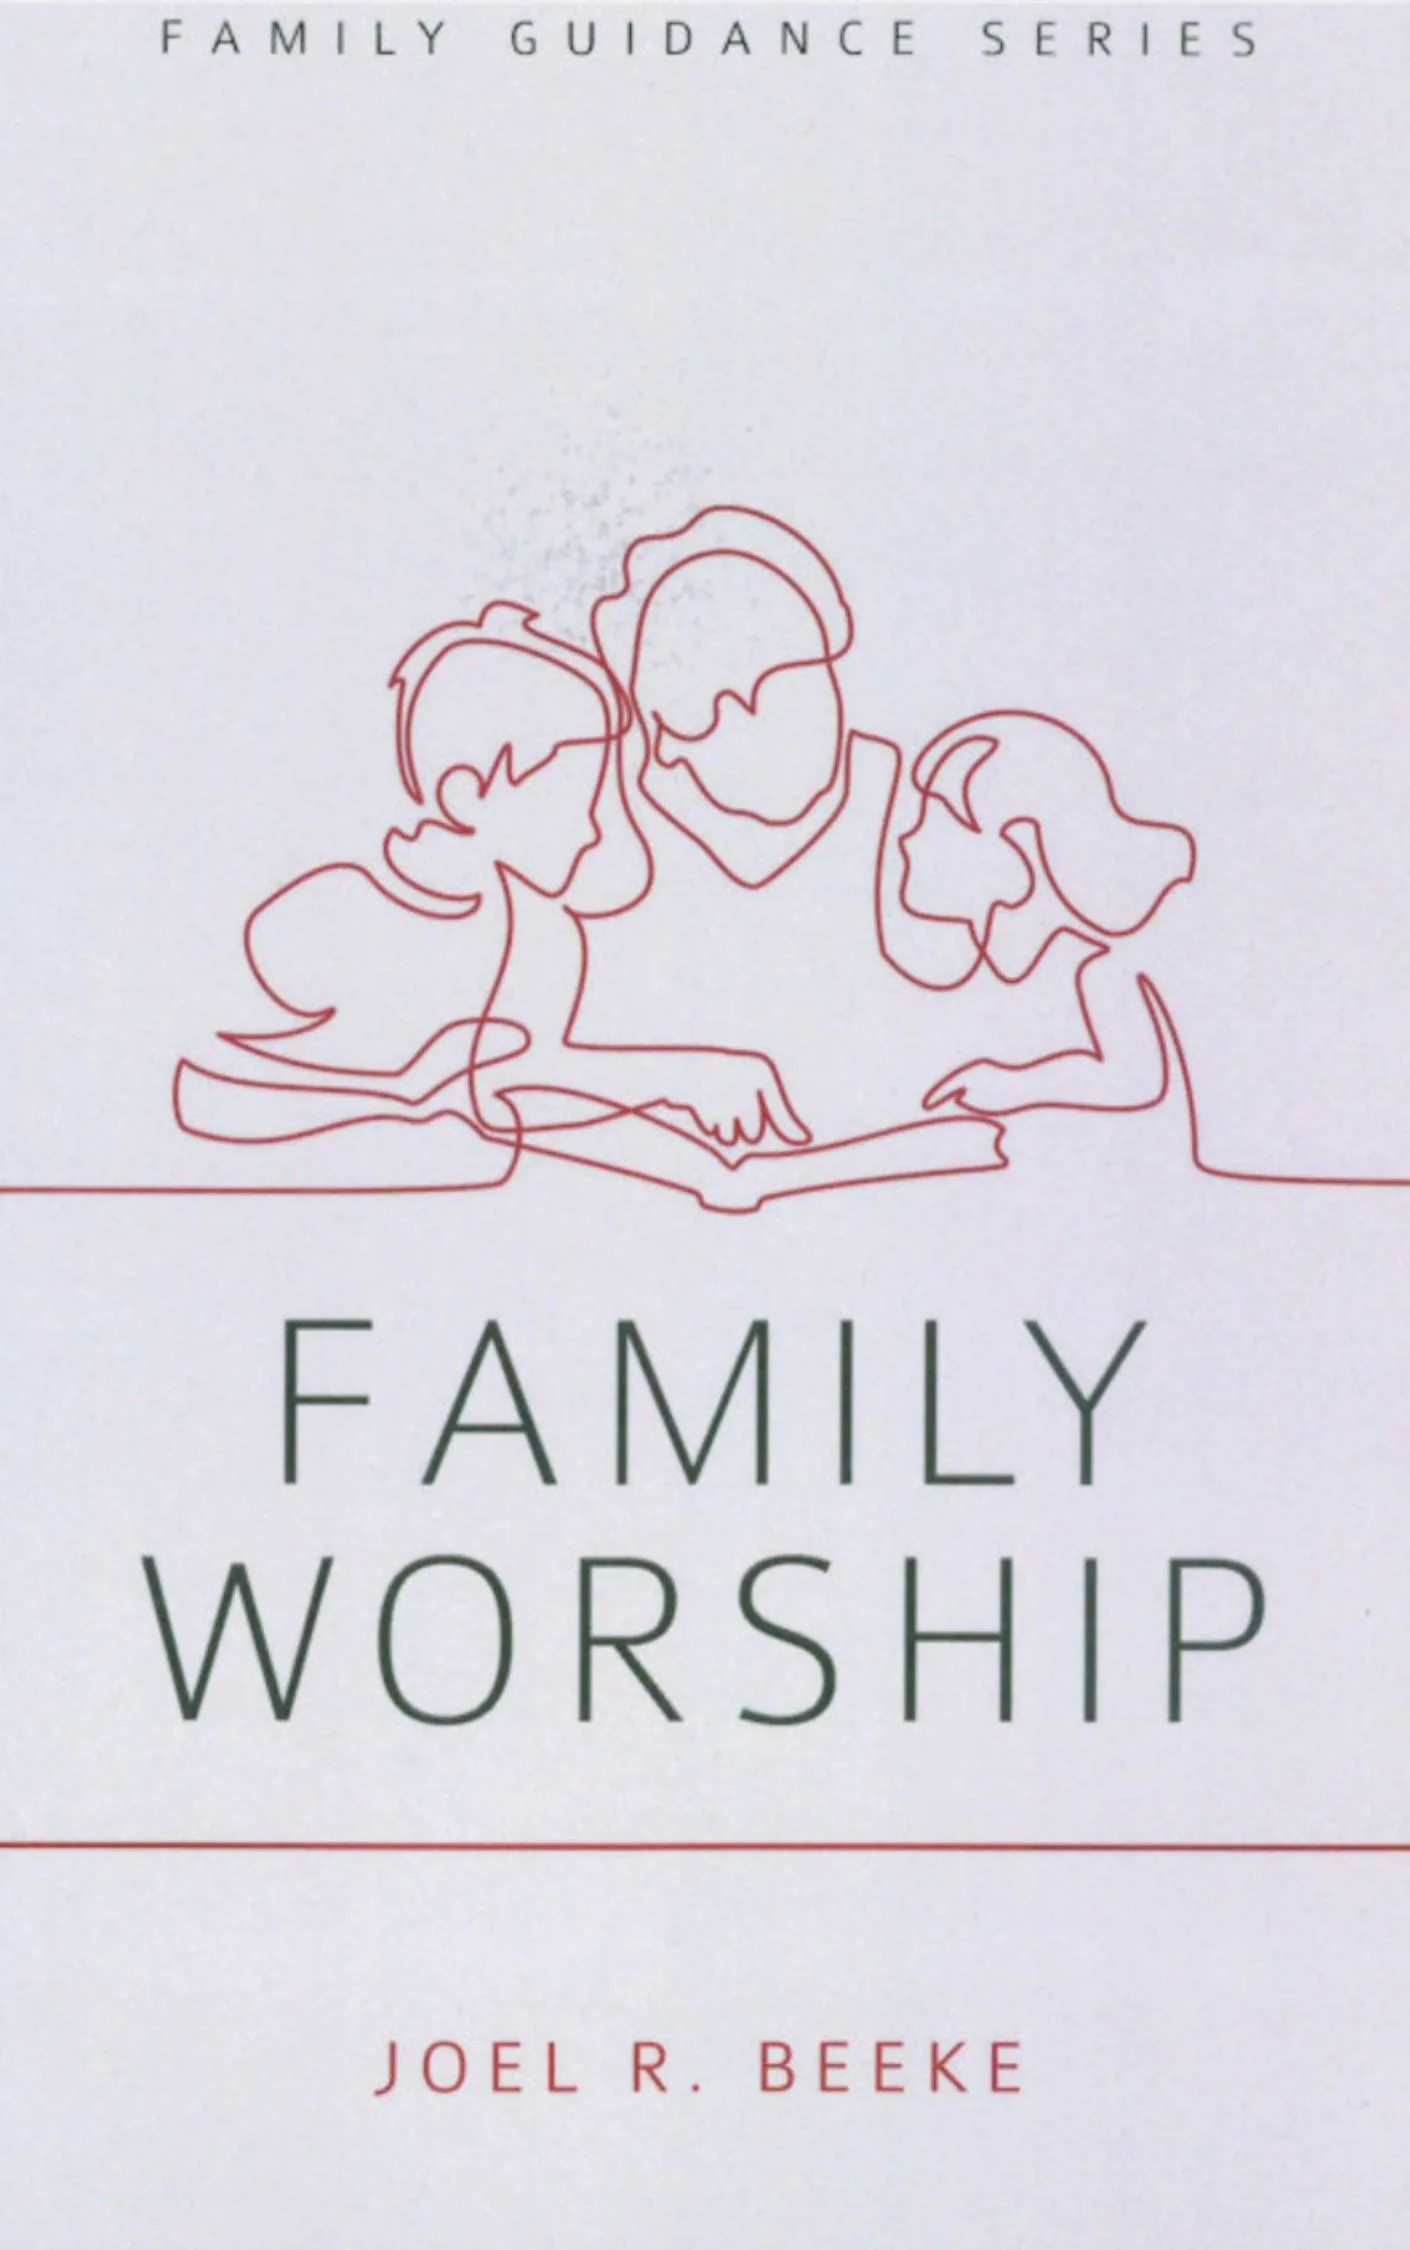 Family Worship by Joel R. Beeke